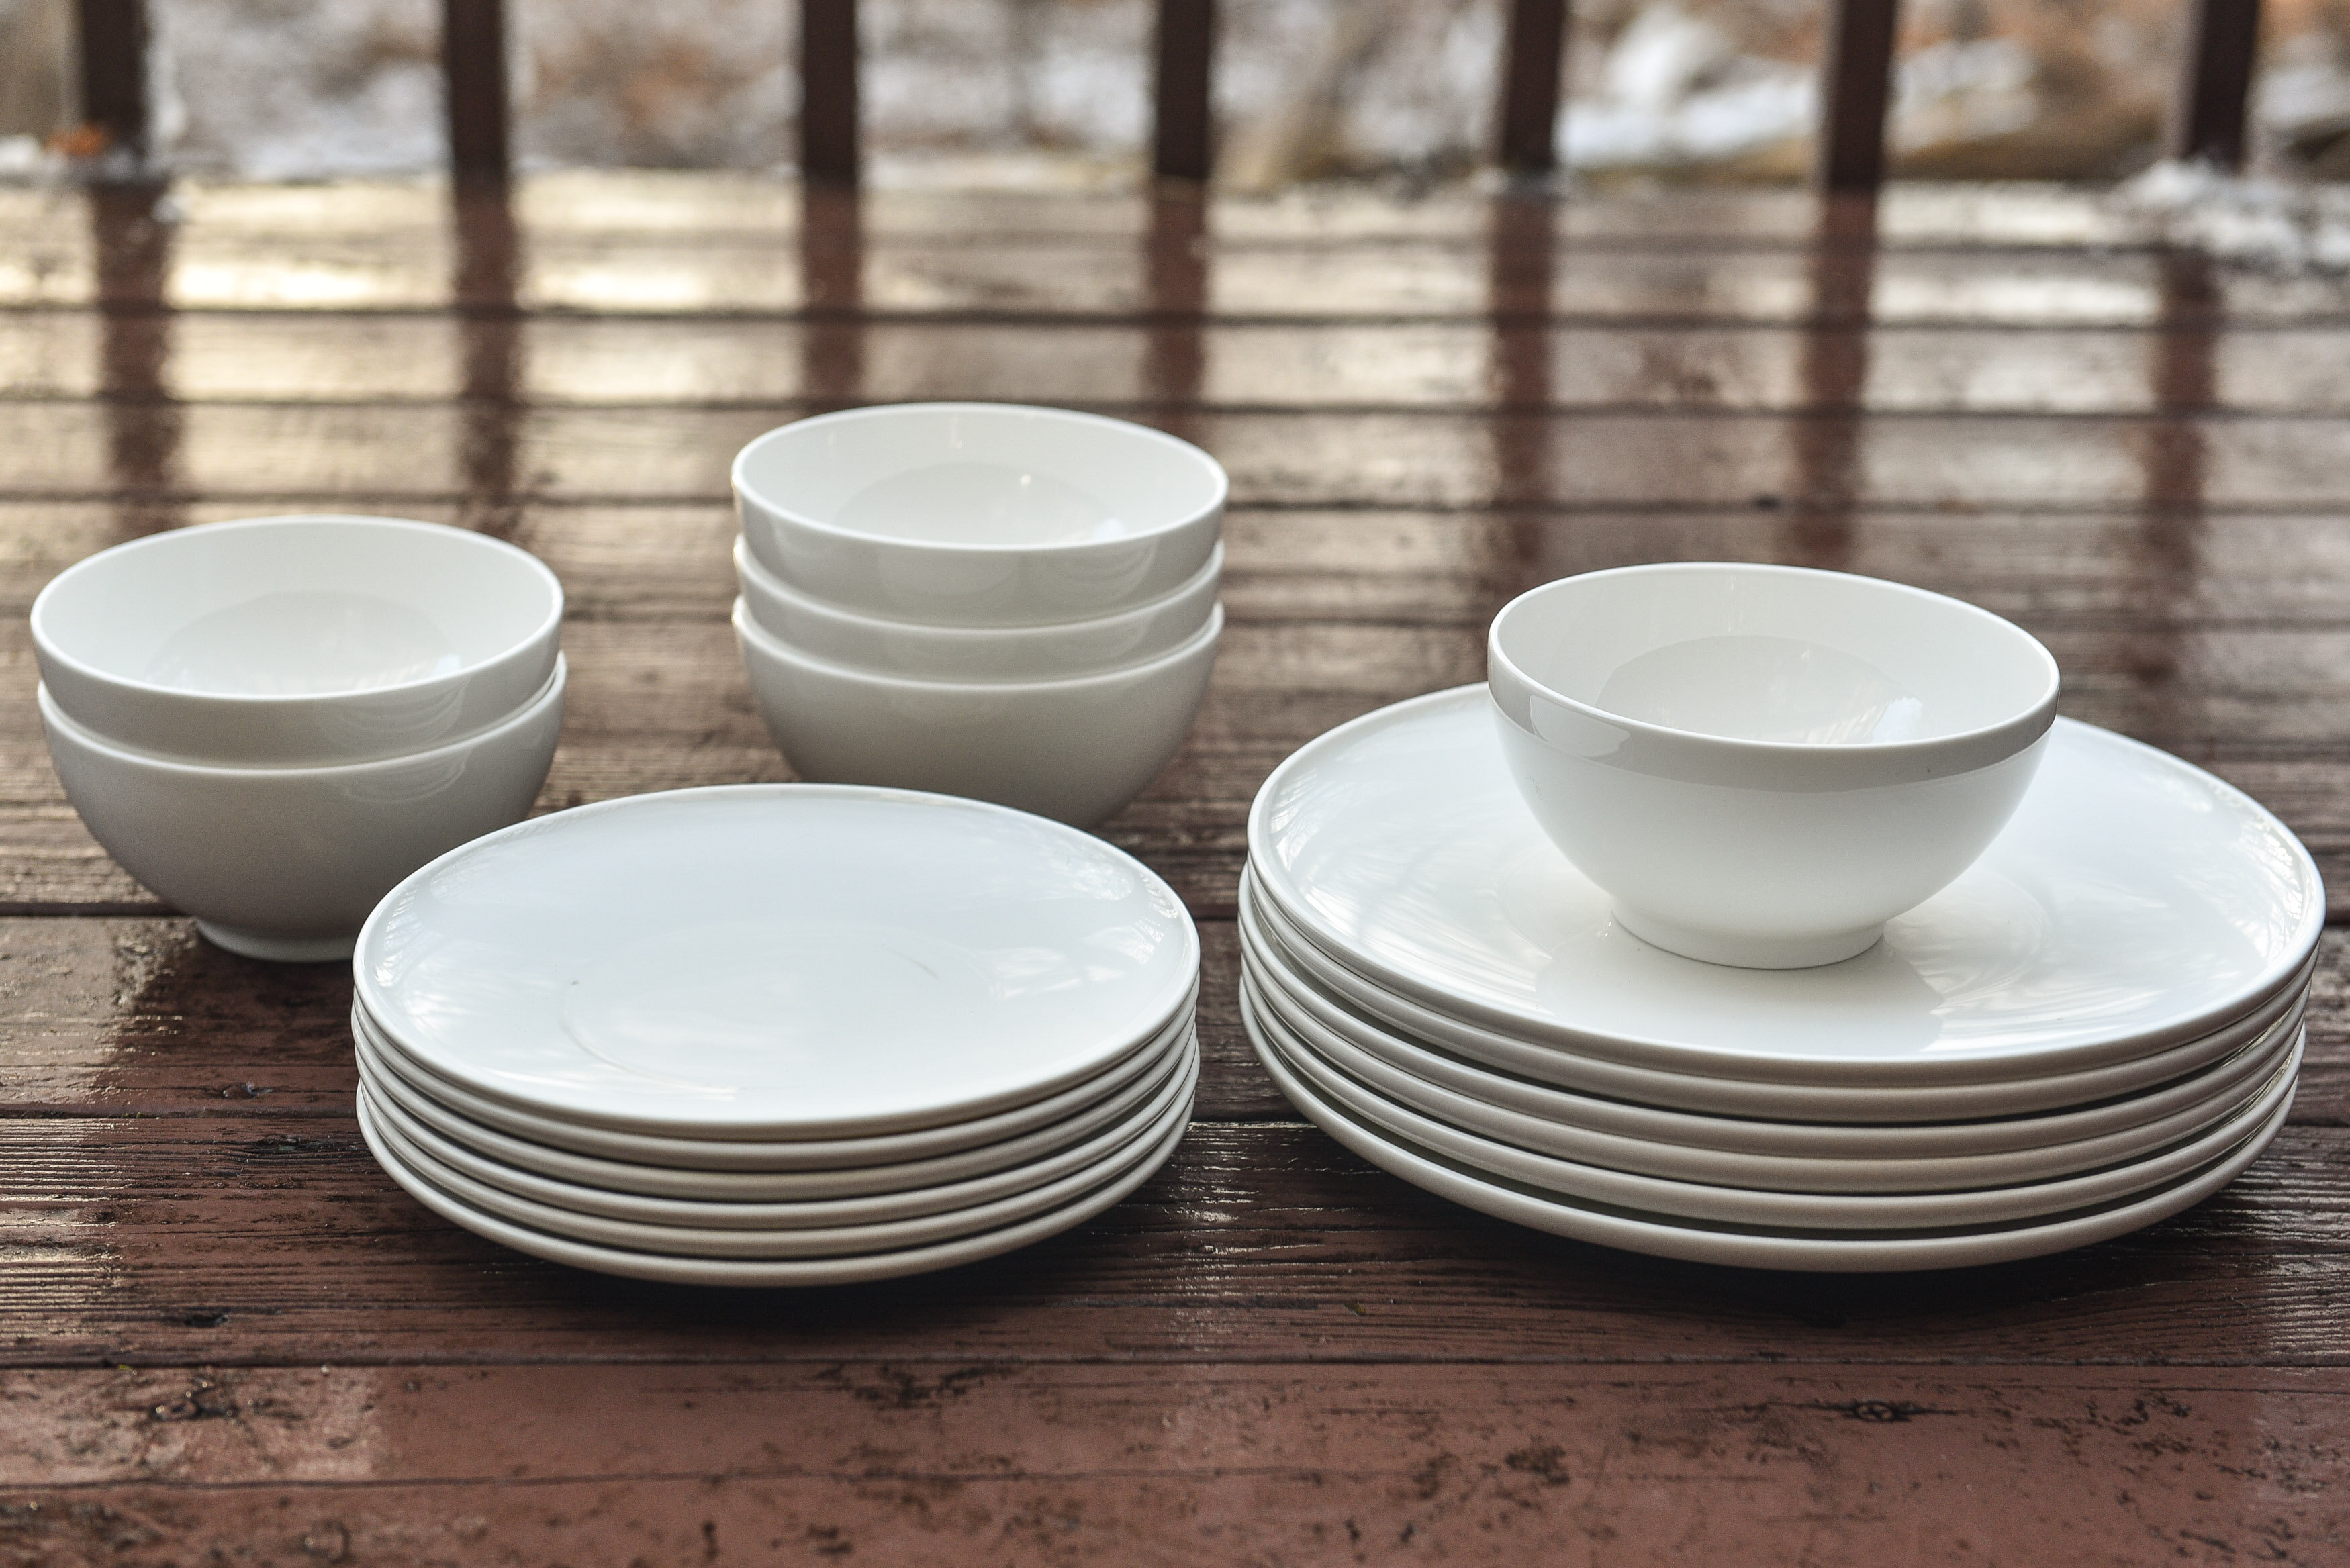 18-Piece Porcelain Dinner Set Plates Bowls Dinnerware Crockery Service for 6 Red 